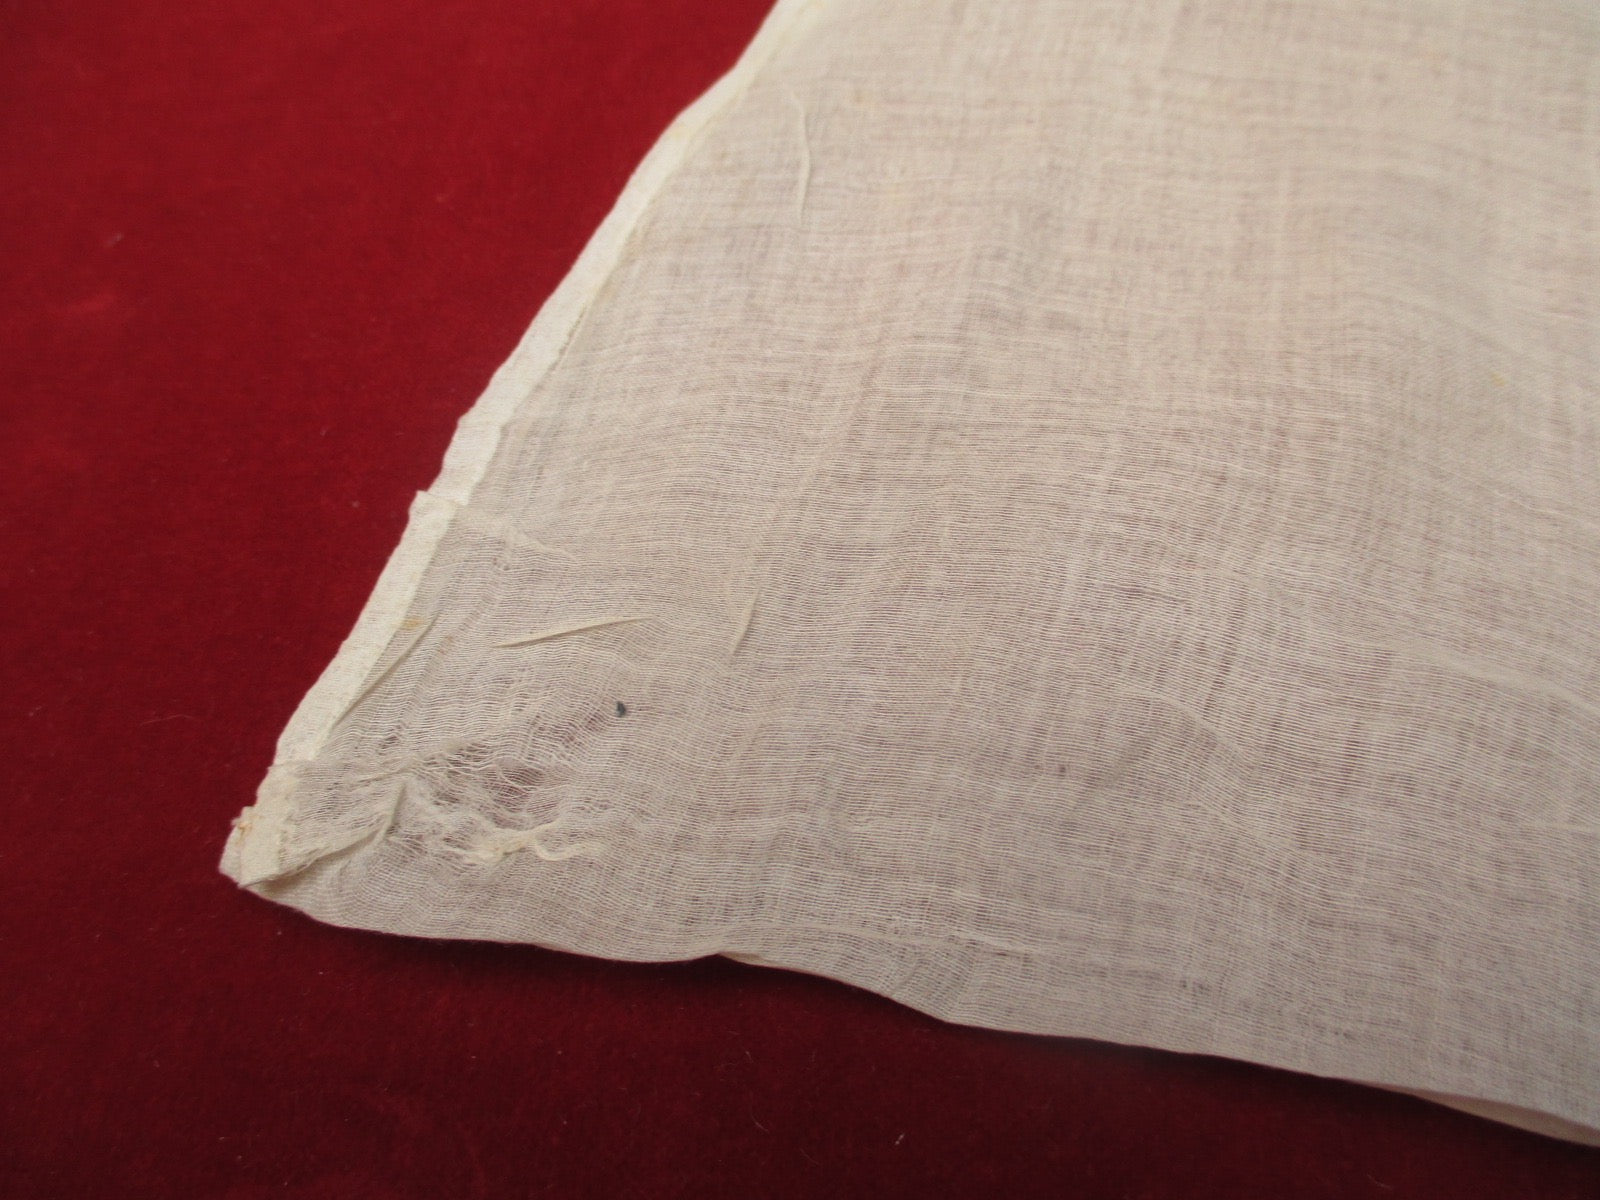 Antique Victorian cotton sleeve